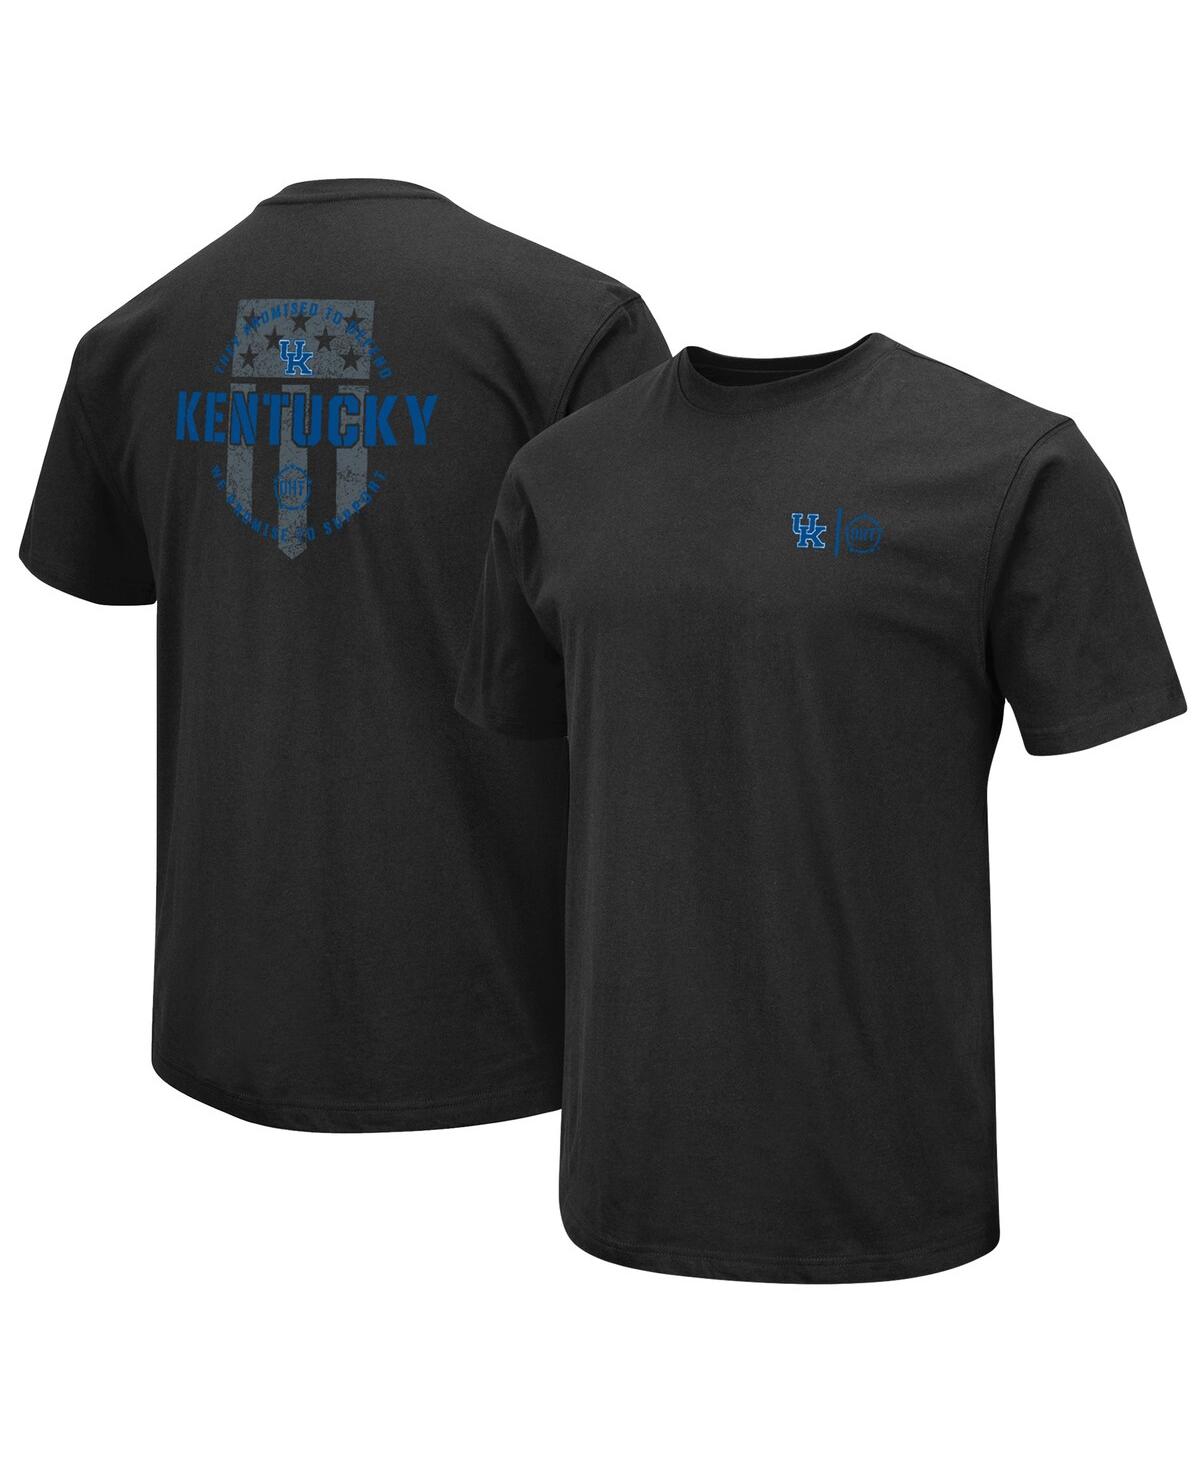 Colosseum Men's  Black Kentucky Wildcats Oht Military-inspired Appreciation T-shirt